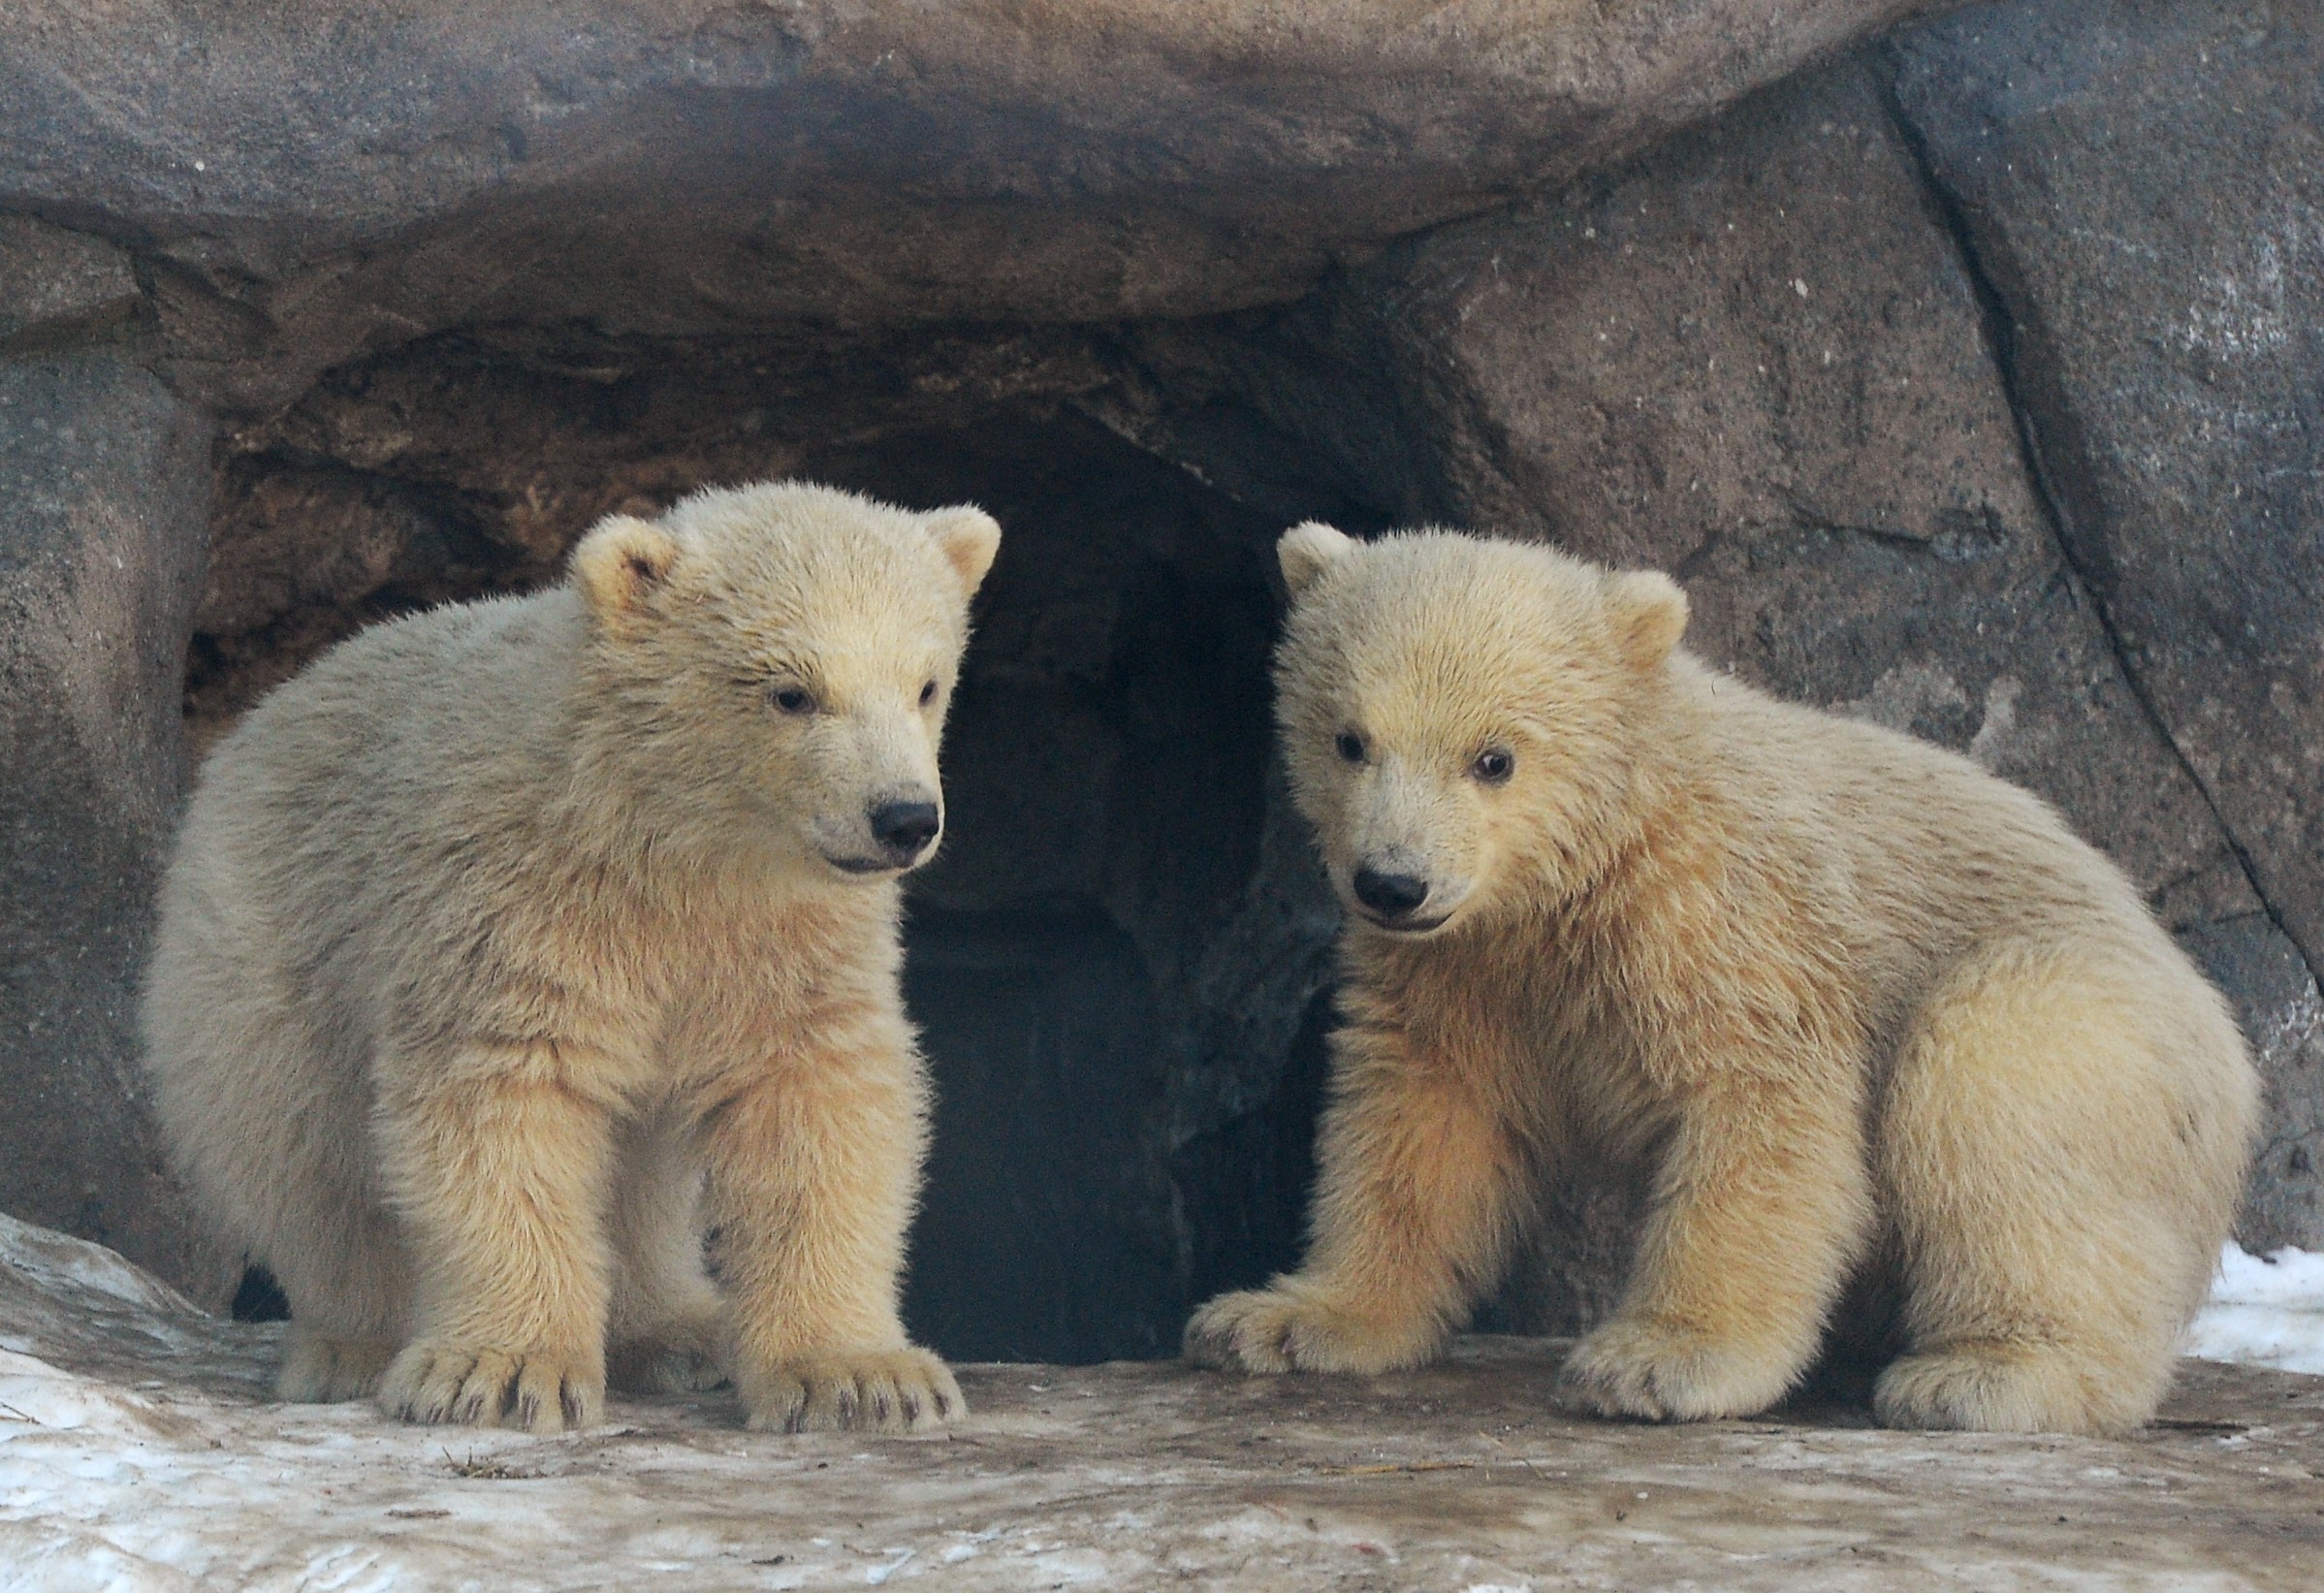 Bears 2 shop. Два медвежонка. Медвежата фото. 2 Медведя. Полярные медведи в Москве.